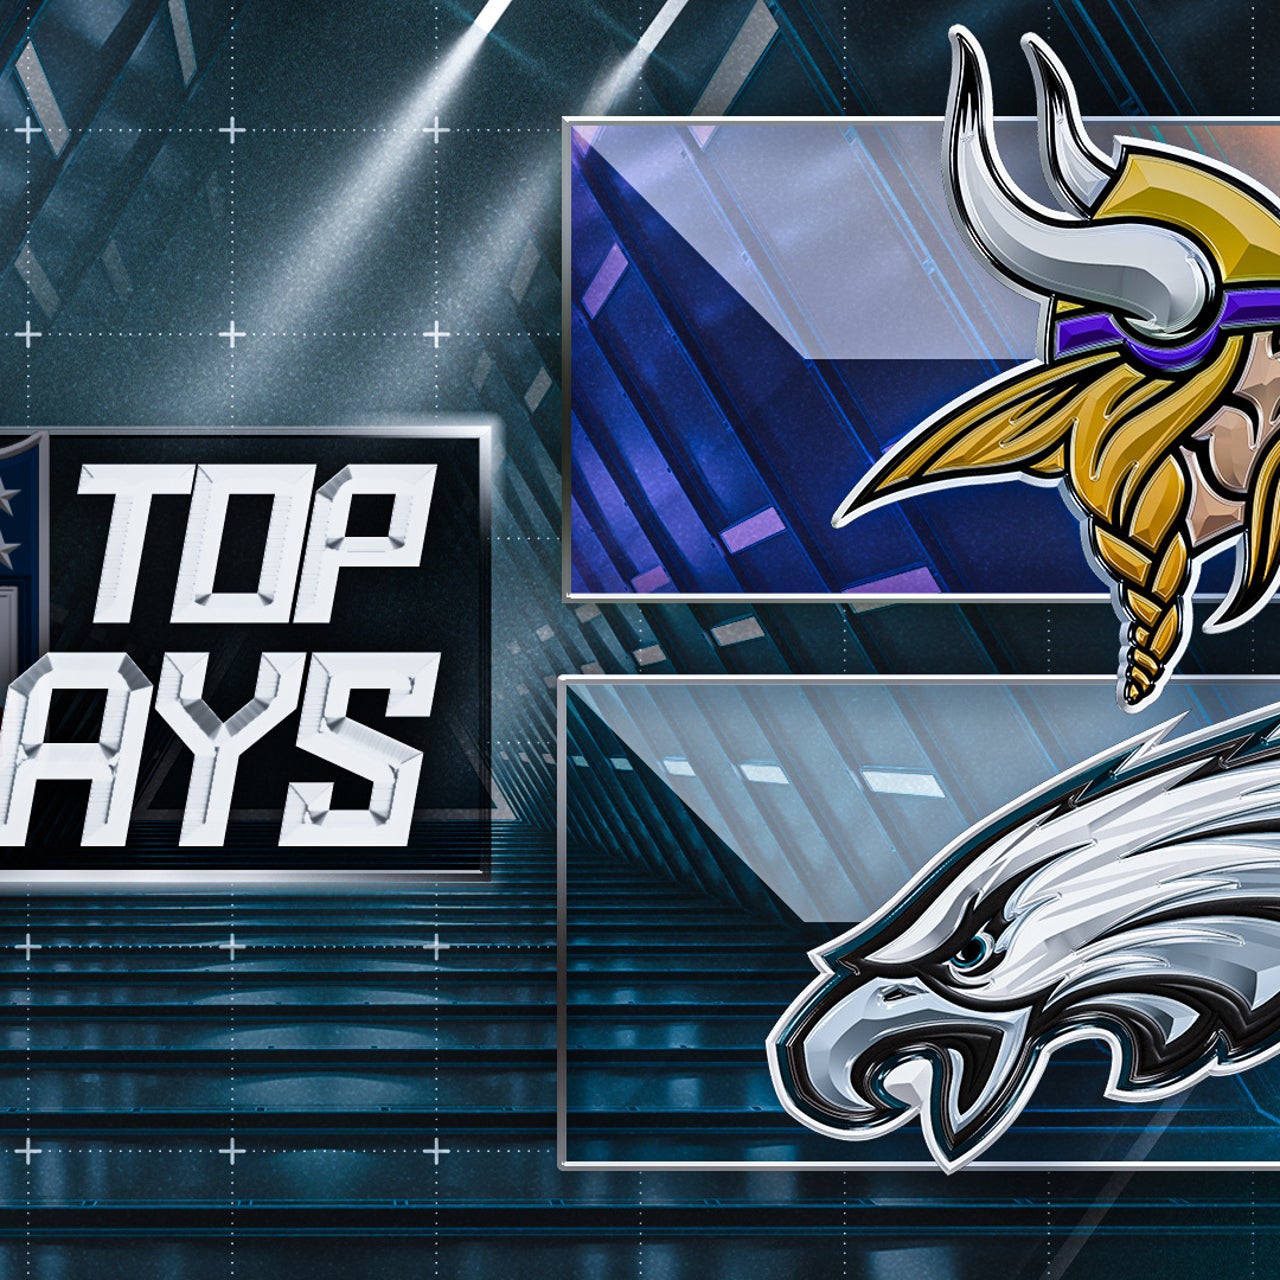 How to watch Minnesota Vikings vs. Philadelphia Eagles on FOX 9 on